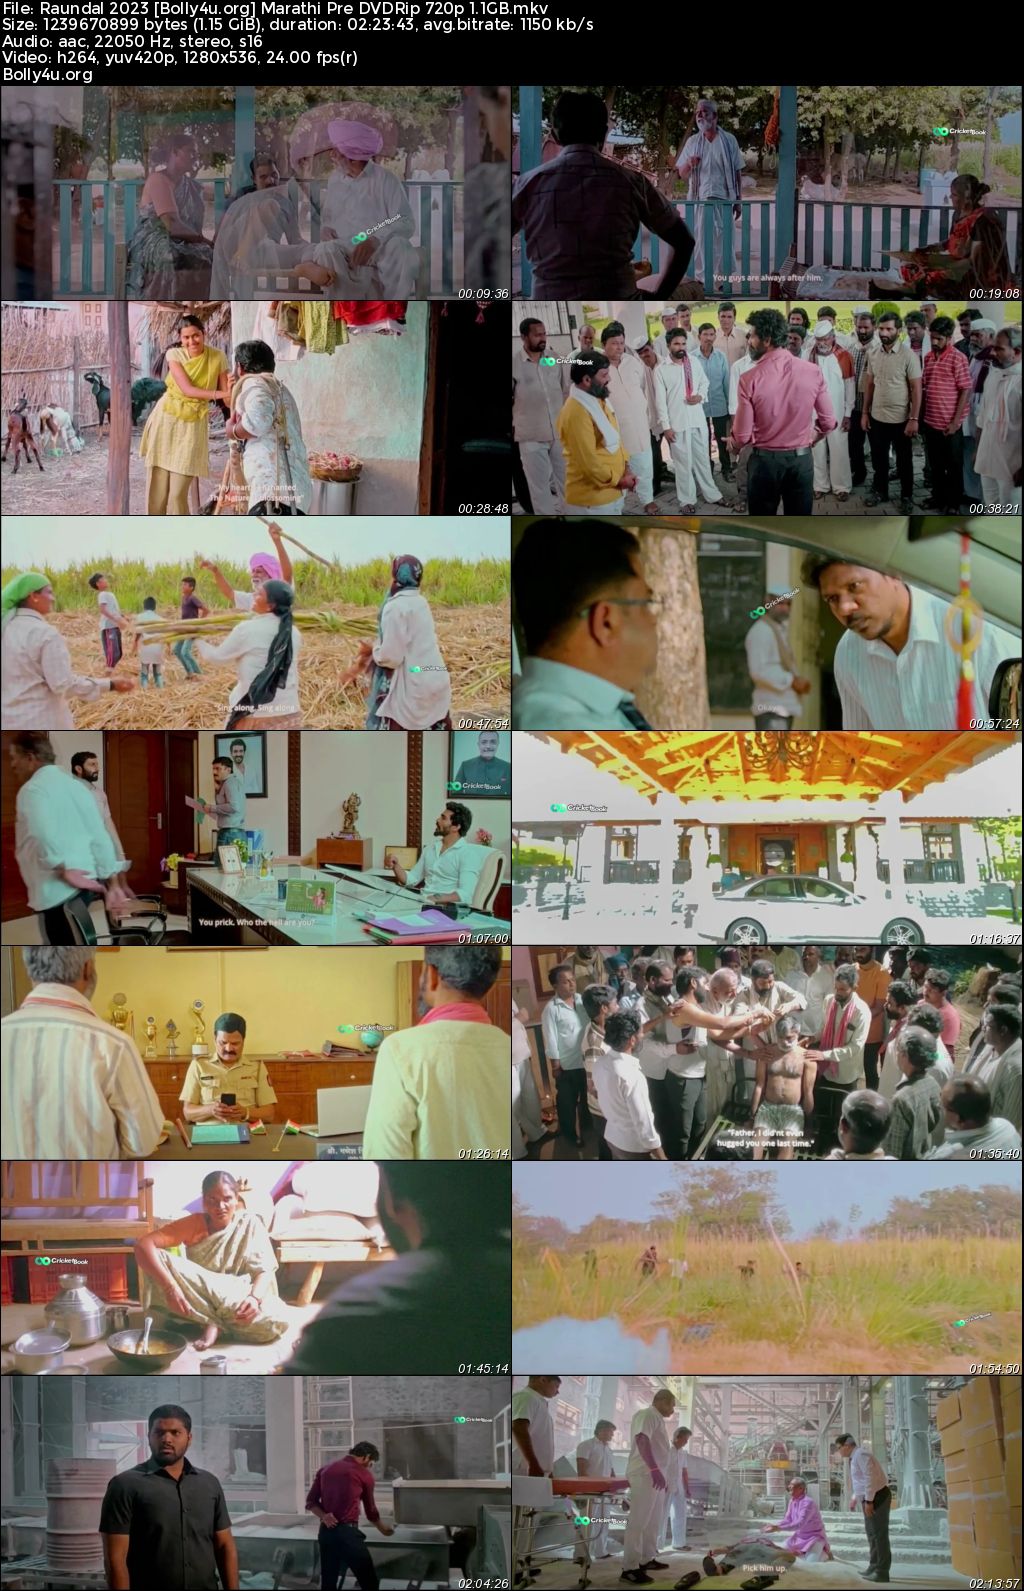 Raundal 2023 Pre DVDRip Marathi Full Movie Download 720p 480p